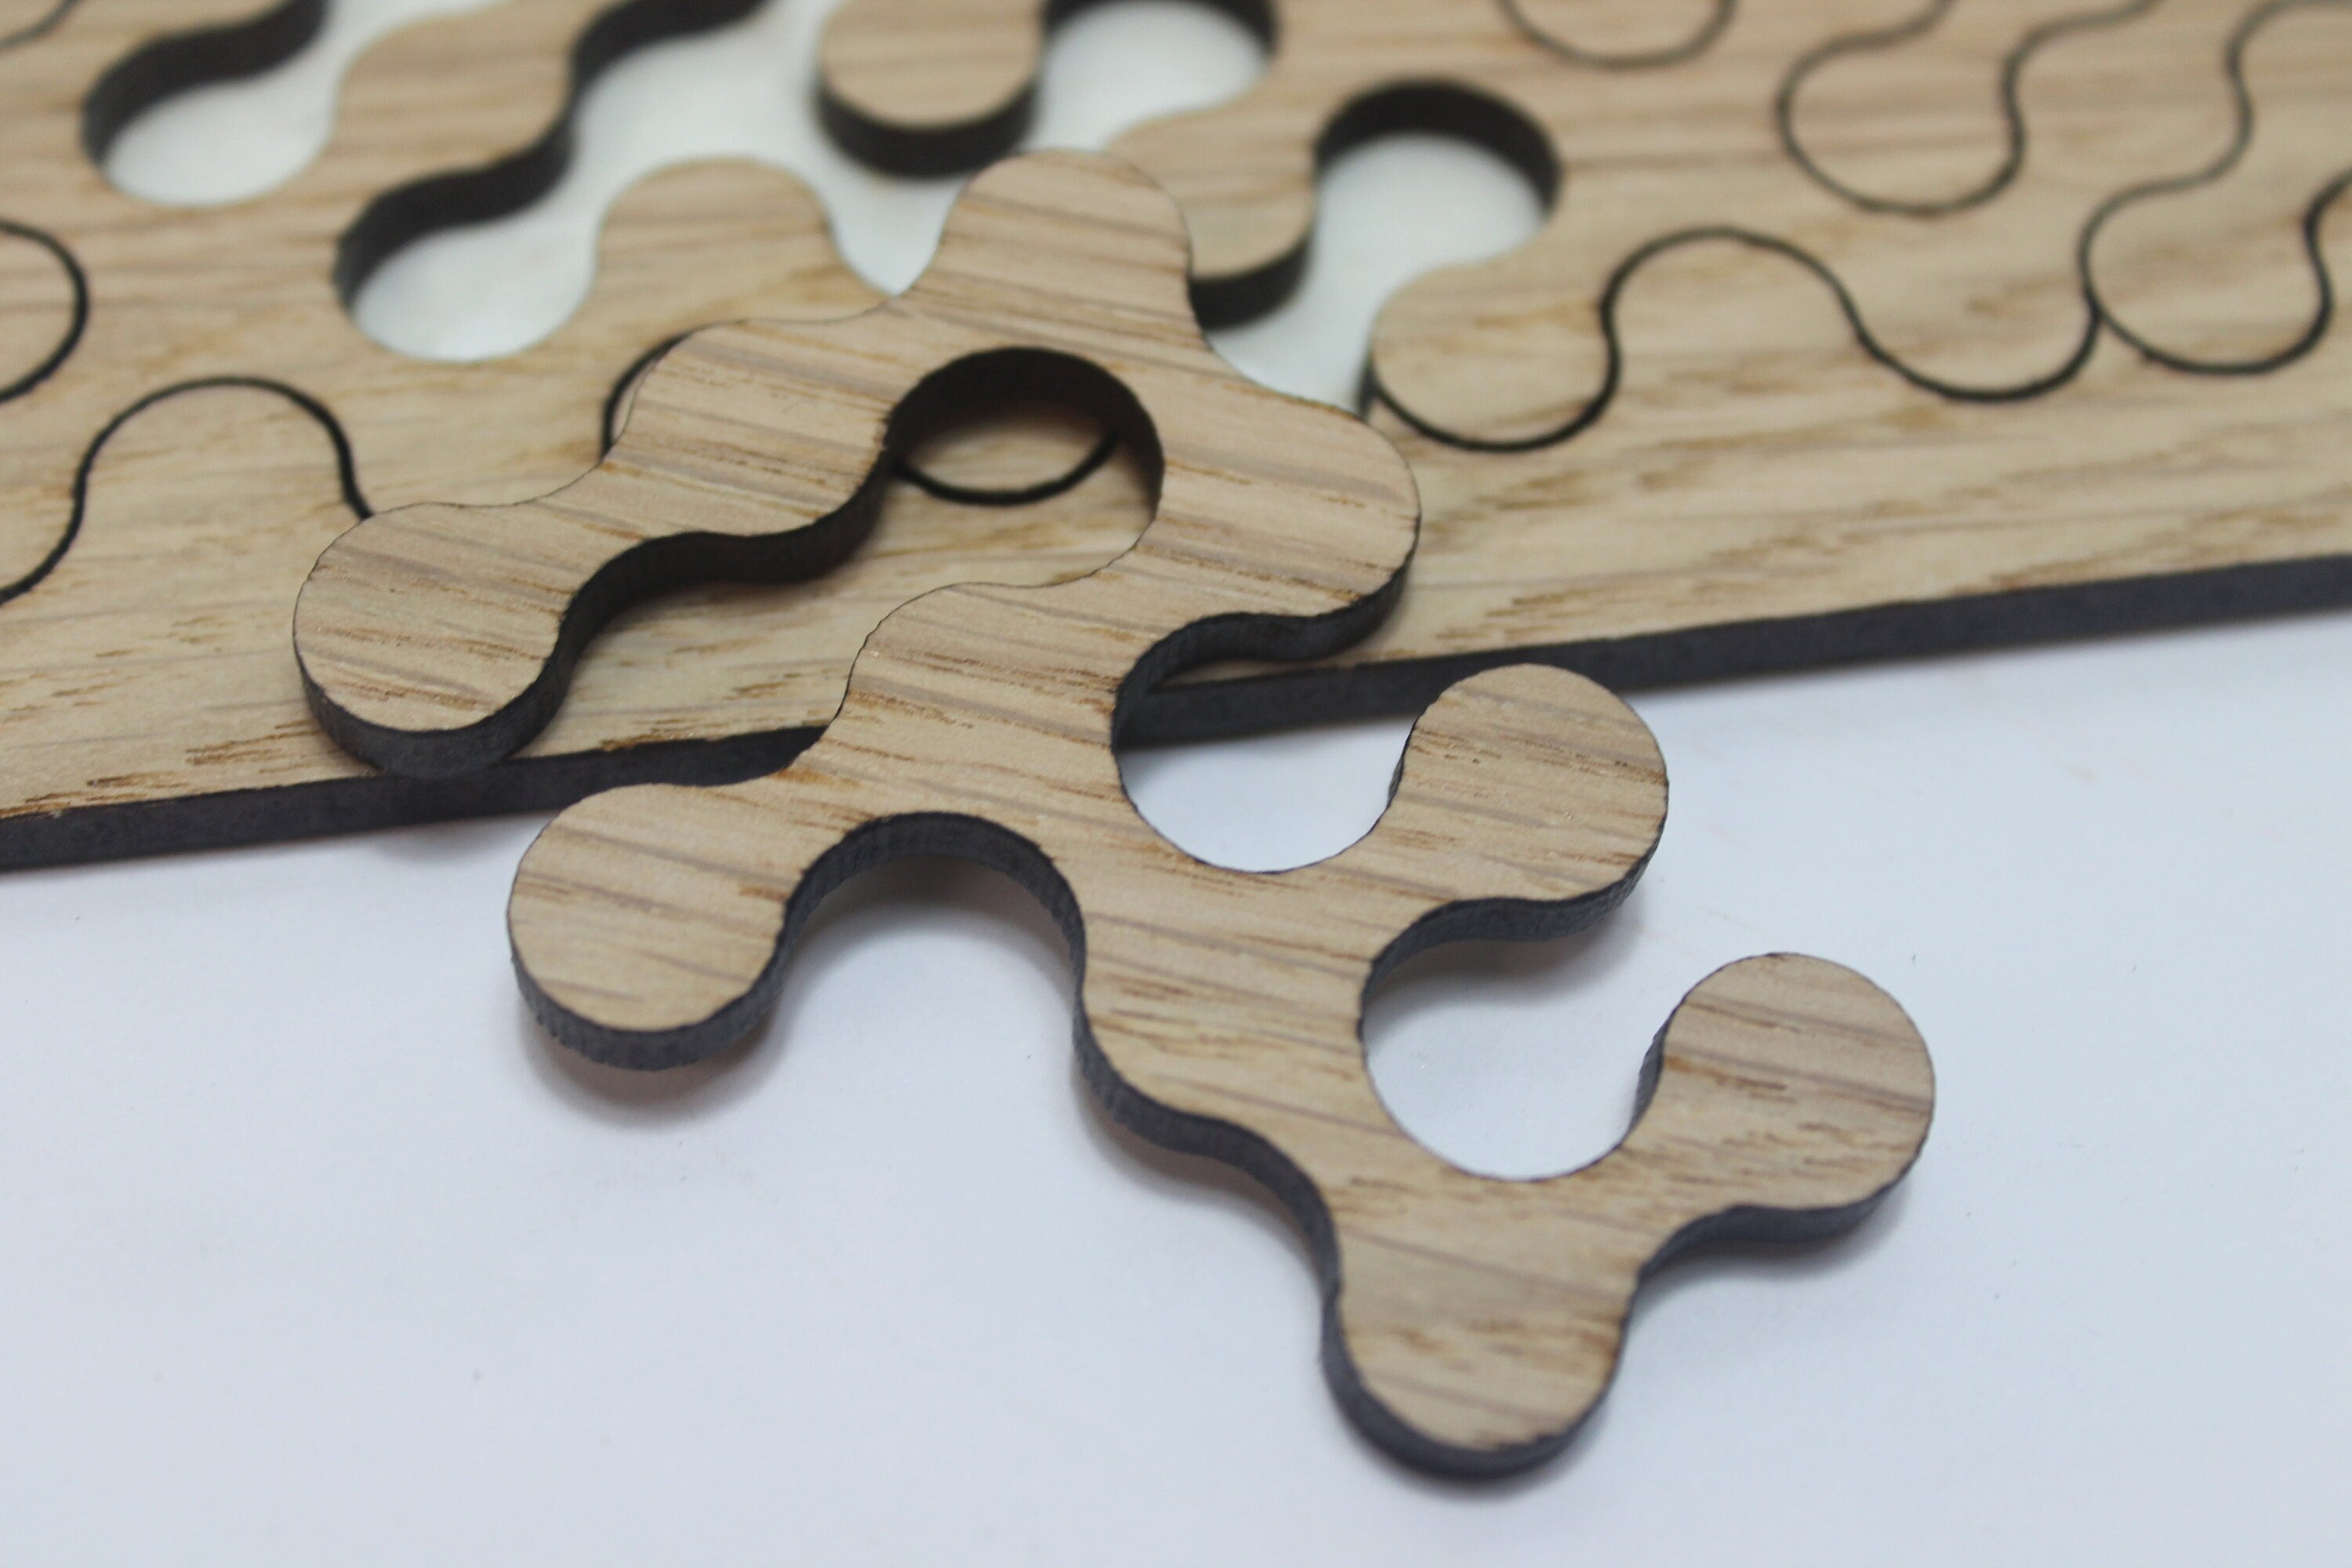 Wood Grain Brain Drain Puzzle - Hard Wood Jigsaw - Gosper Curve Fractal Puzzle - Circular Pieces